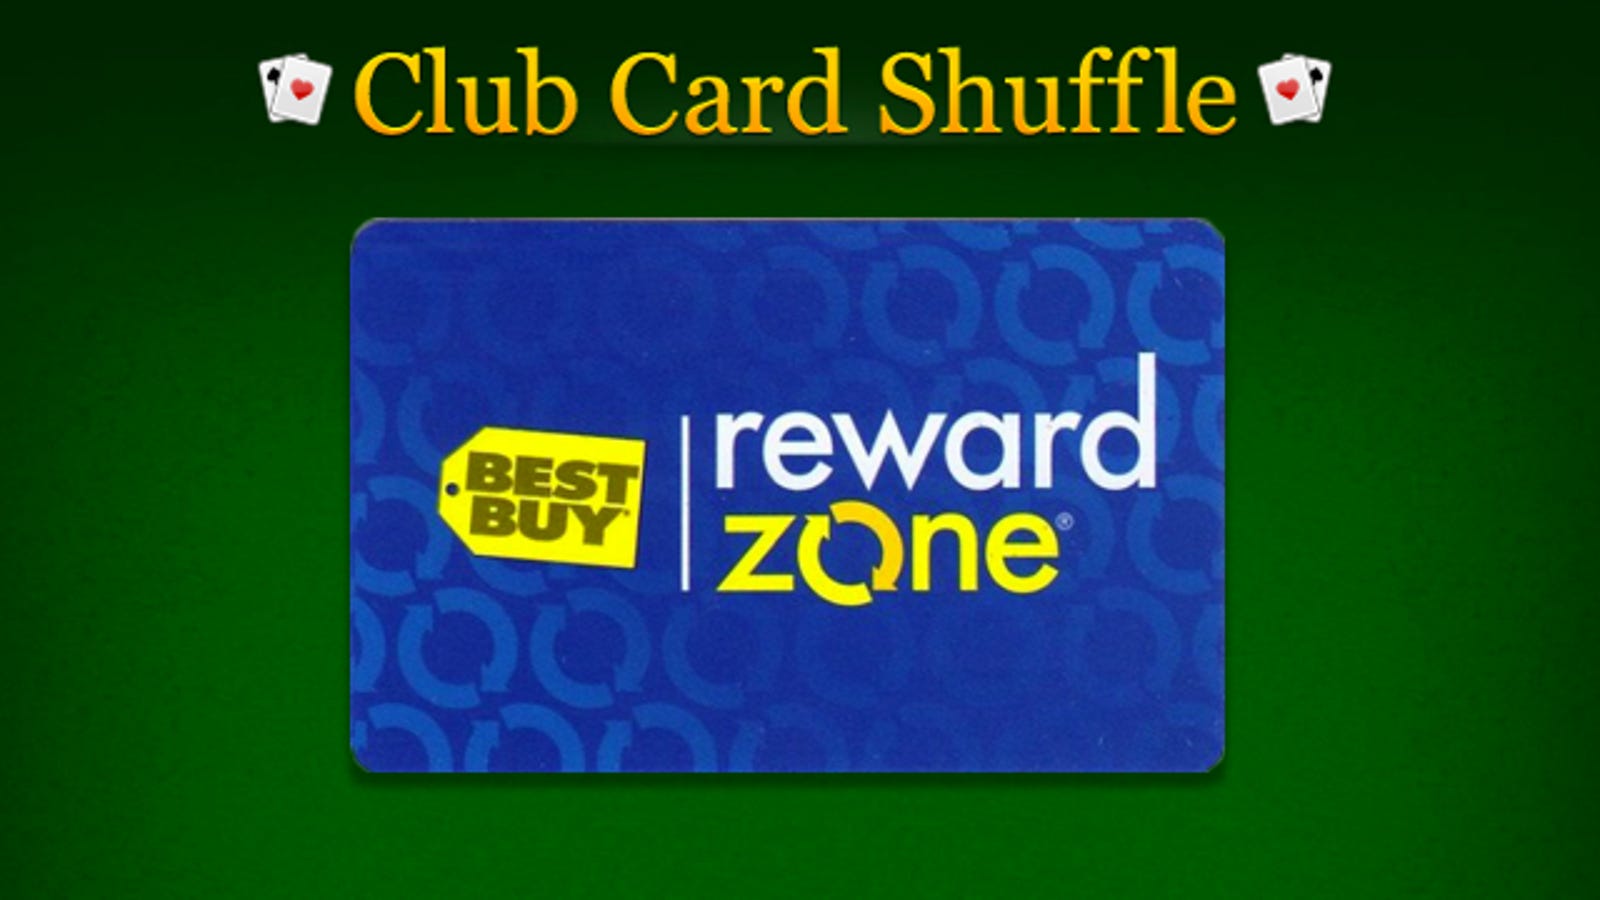 Club Card Shuffle Traffics in Anonymous Rewards Card IDs